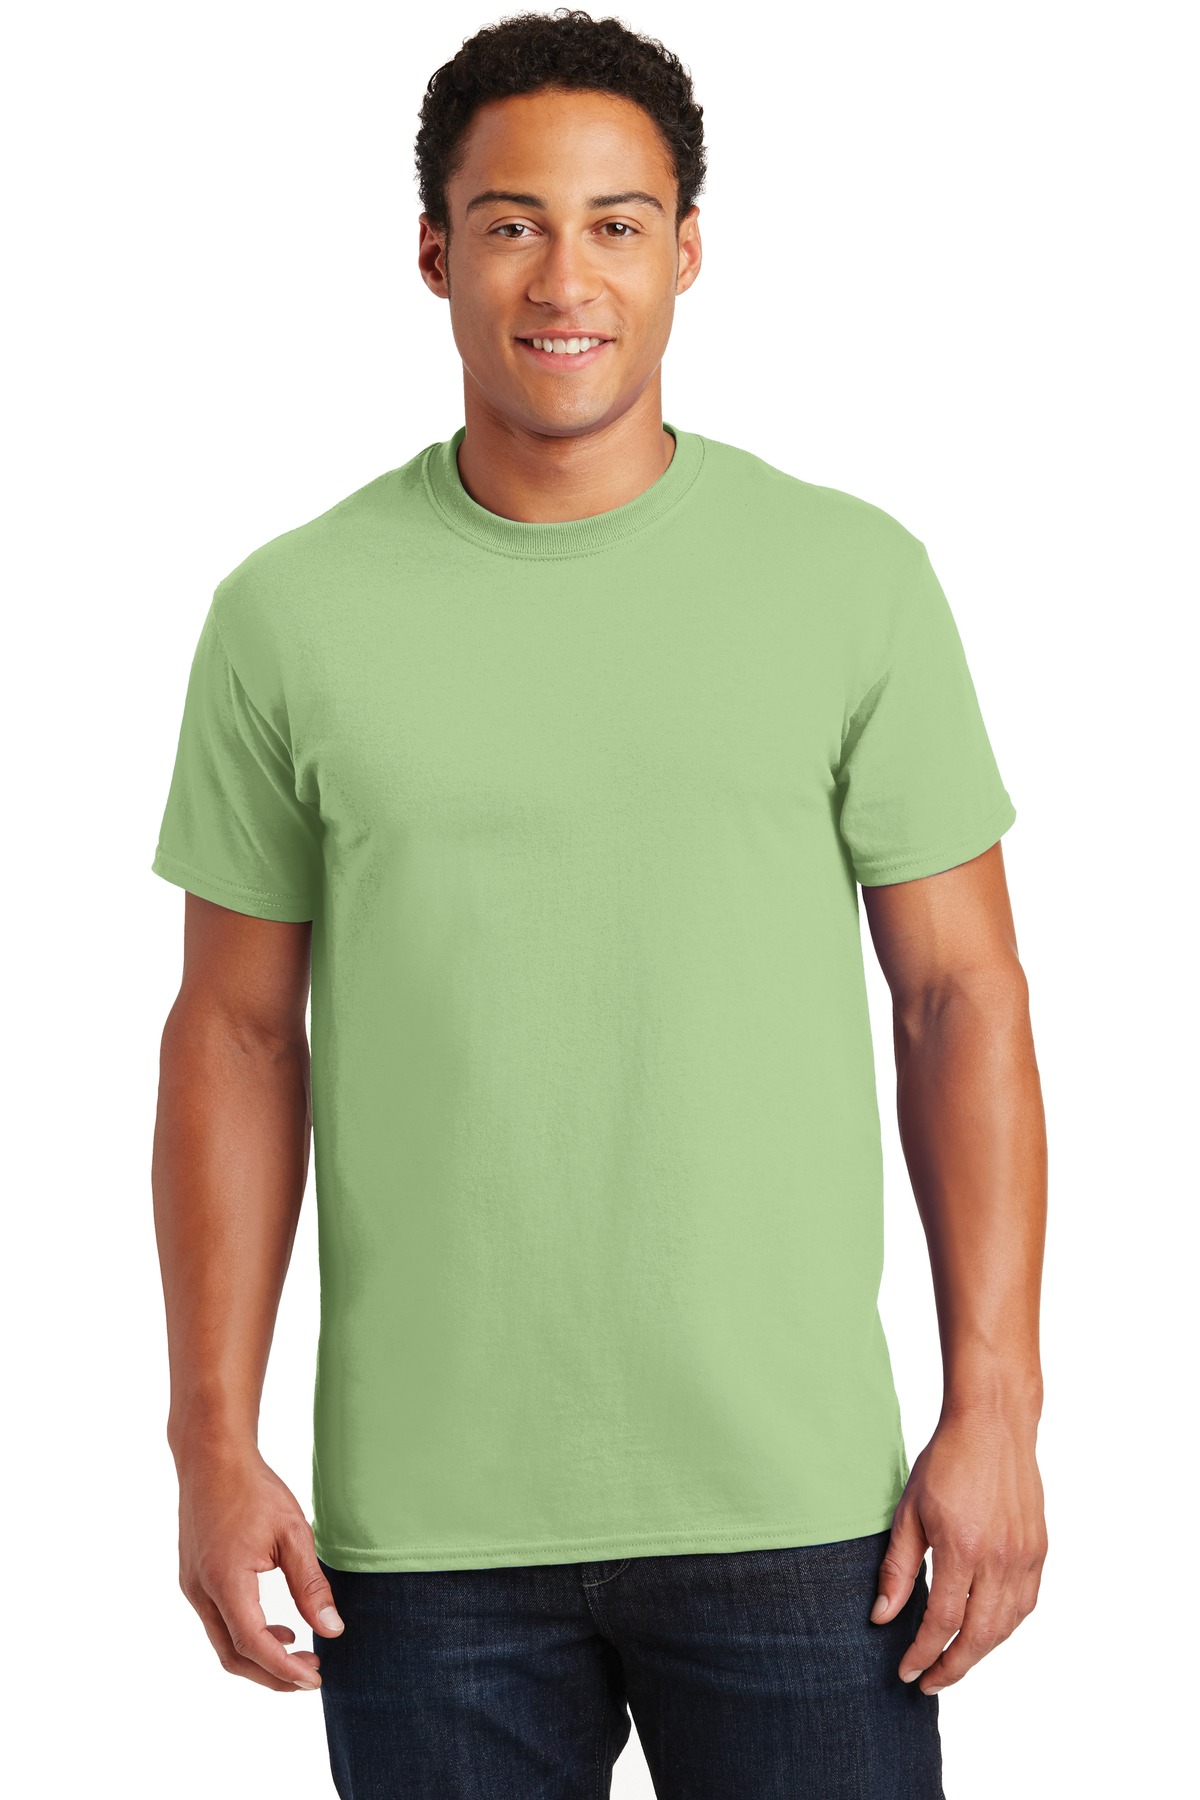 https://images.shirtspace.com/fullsize/kqIbtRlIknQ7%2FLcobFPz8w%3D%3D/59178/1230-gildan-g200-ultra-cotton-100-cotton-t-shirt-front-pistachio.jpg